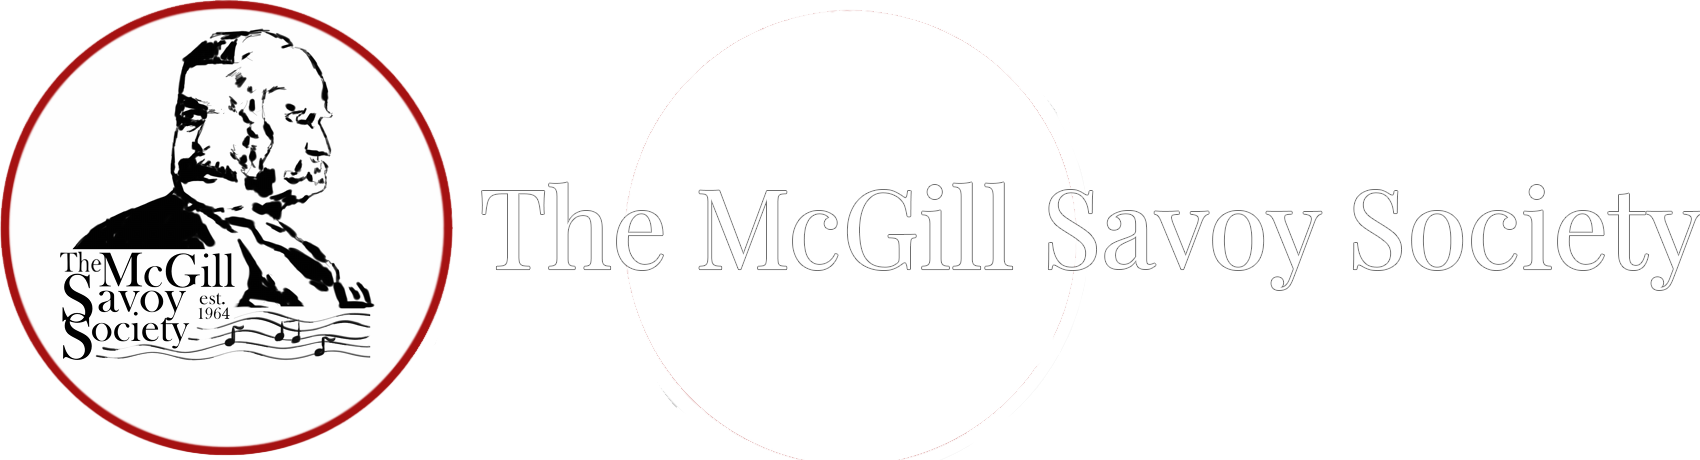 The McGill Savoy Society